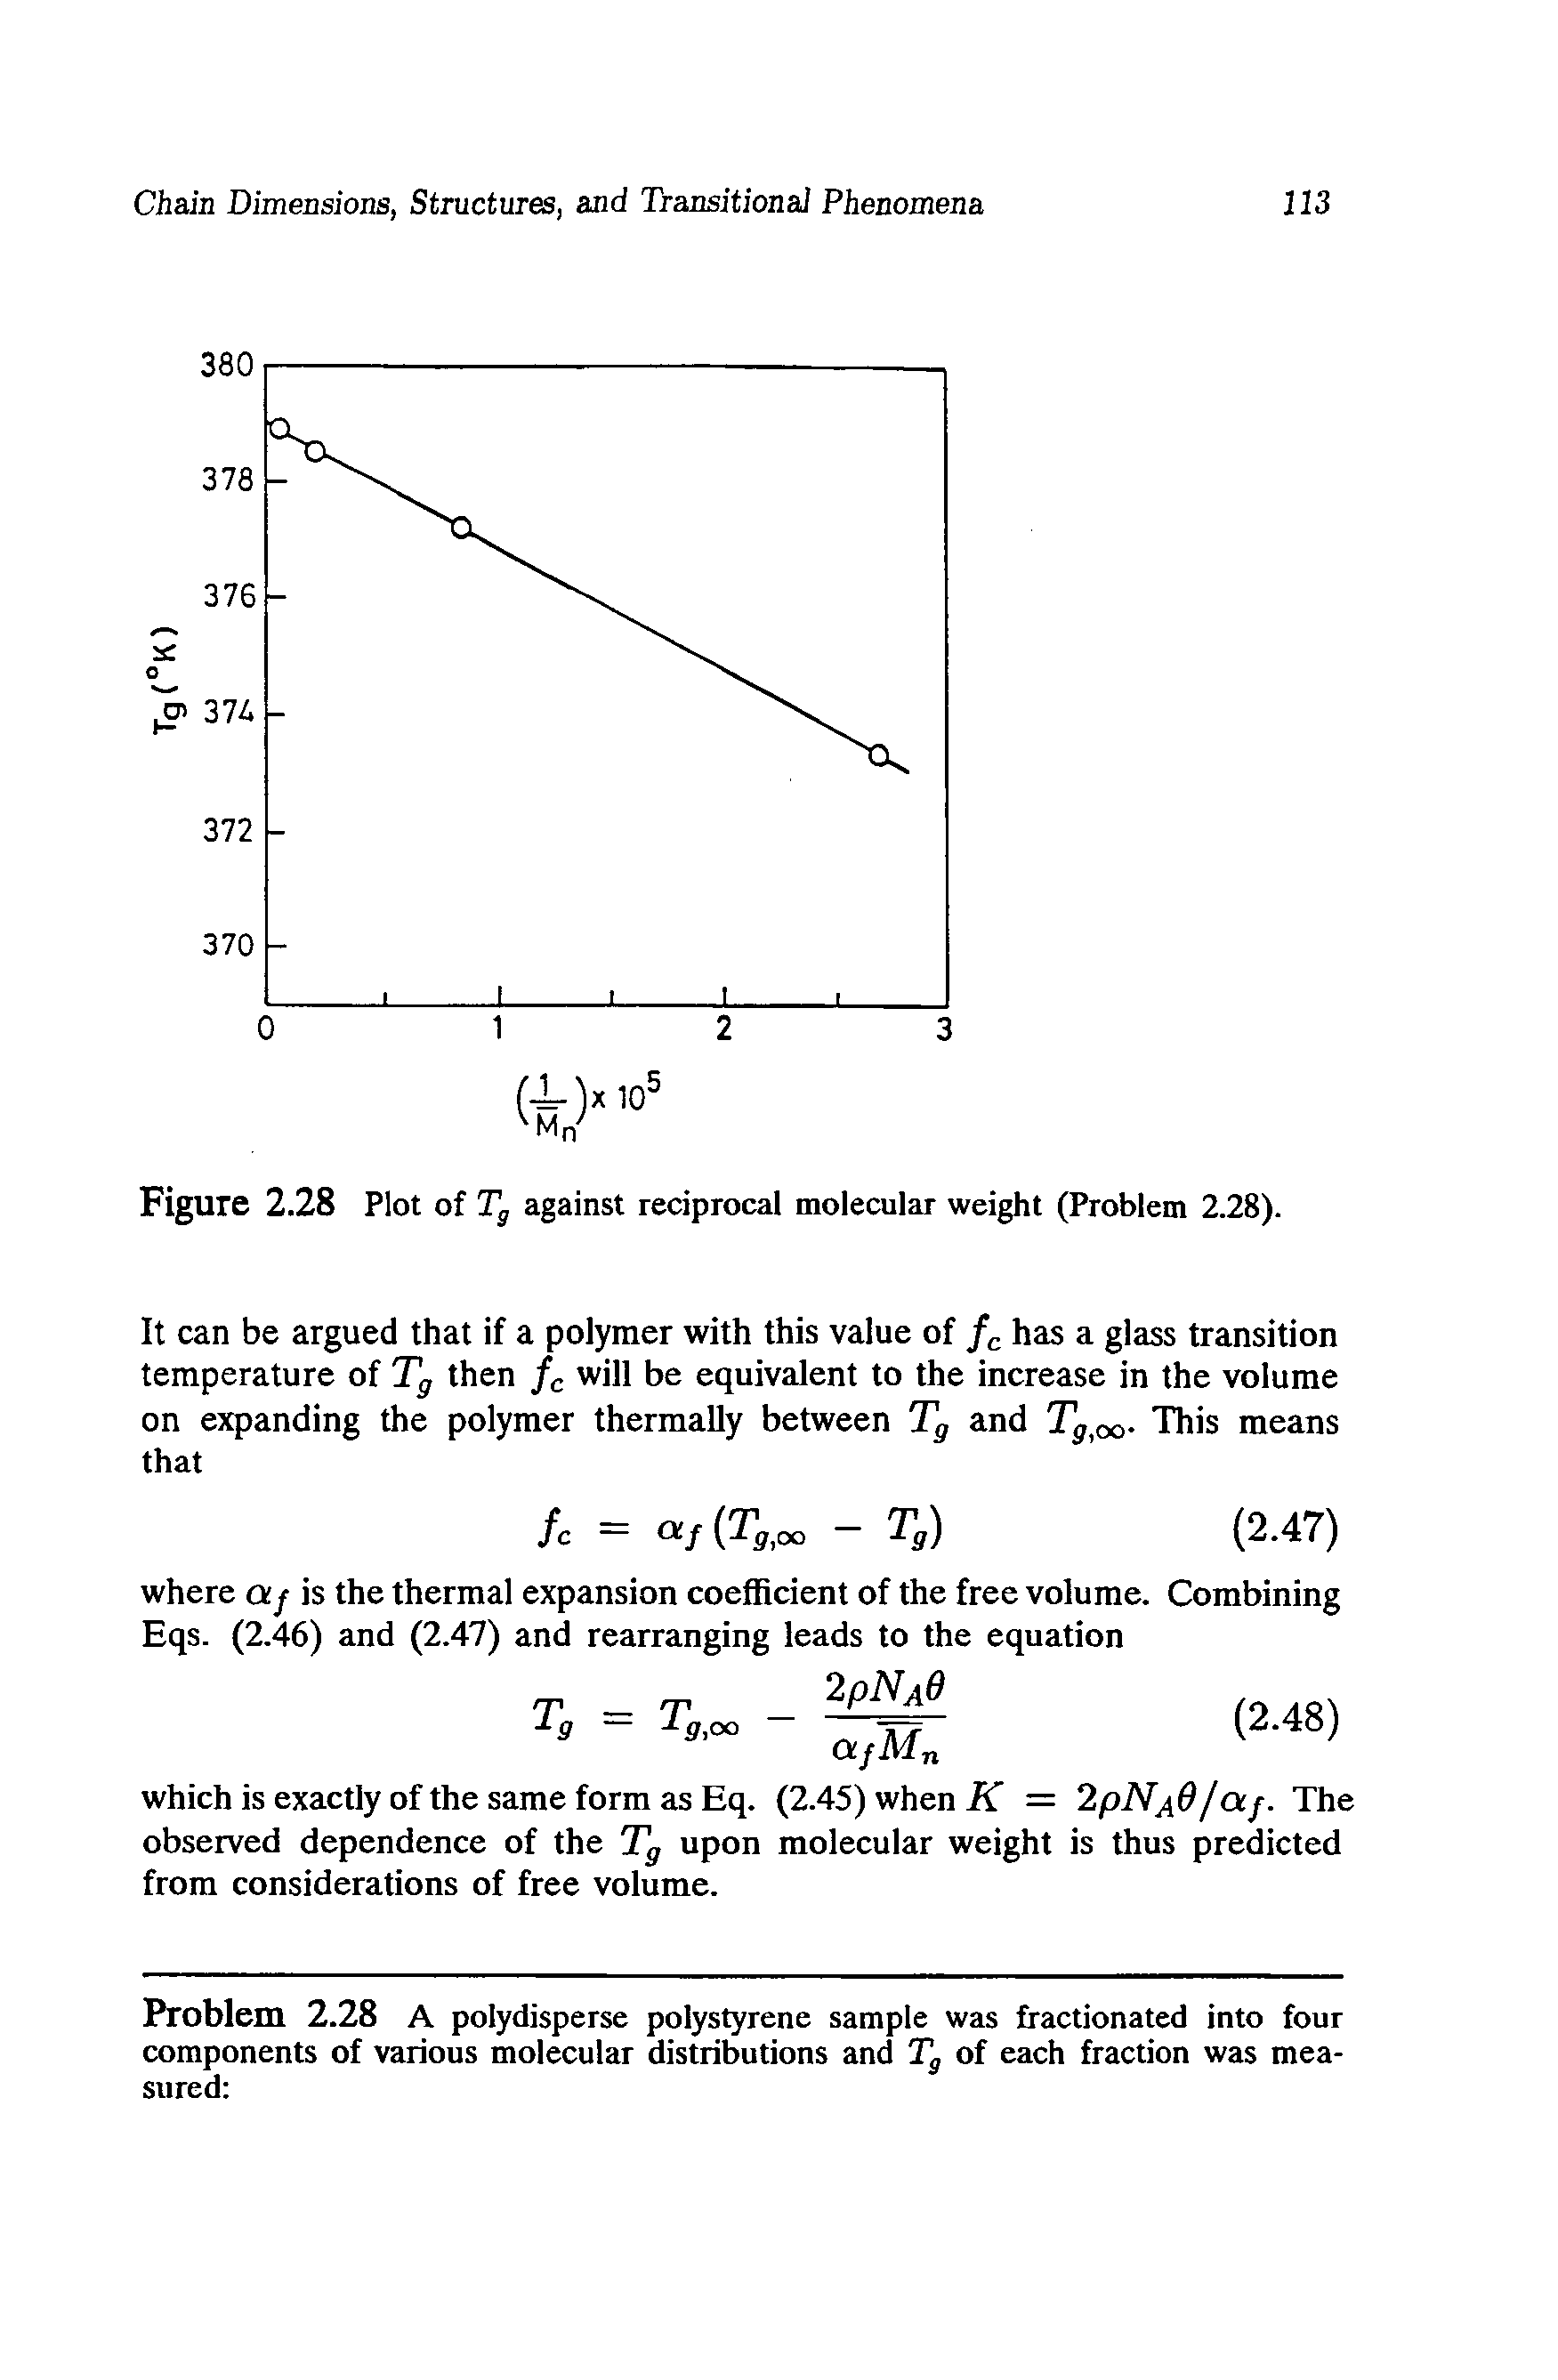 Figure 2.28 Plot of Tg against reciprocal molecular weight (Problem 2.28).